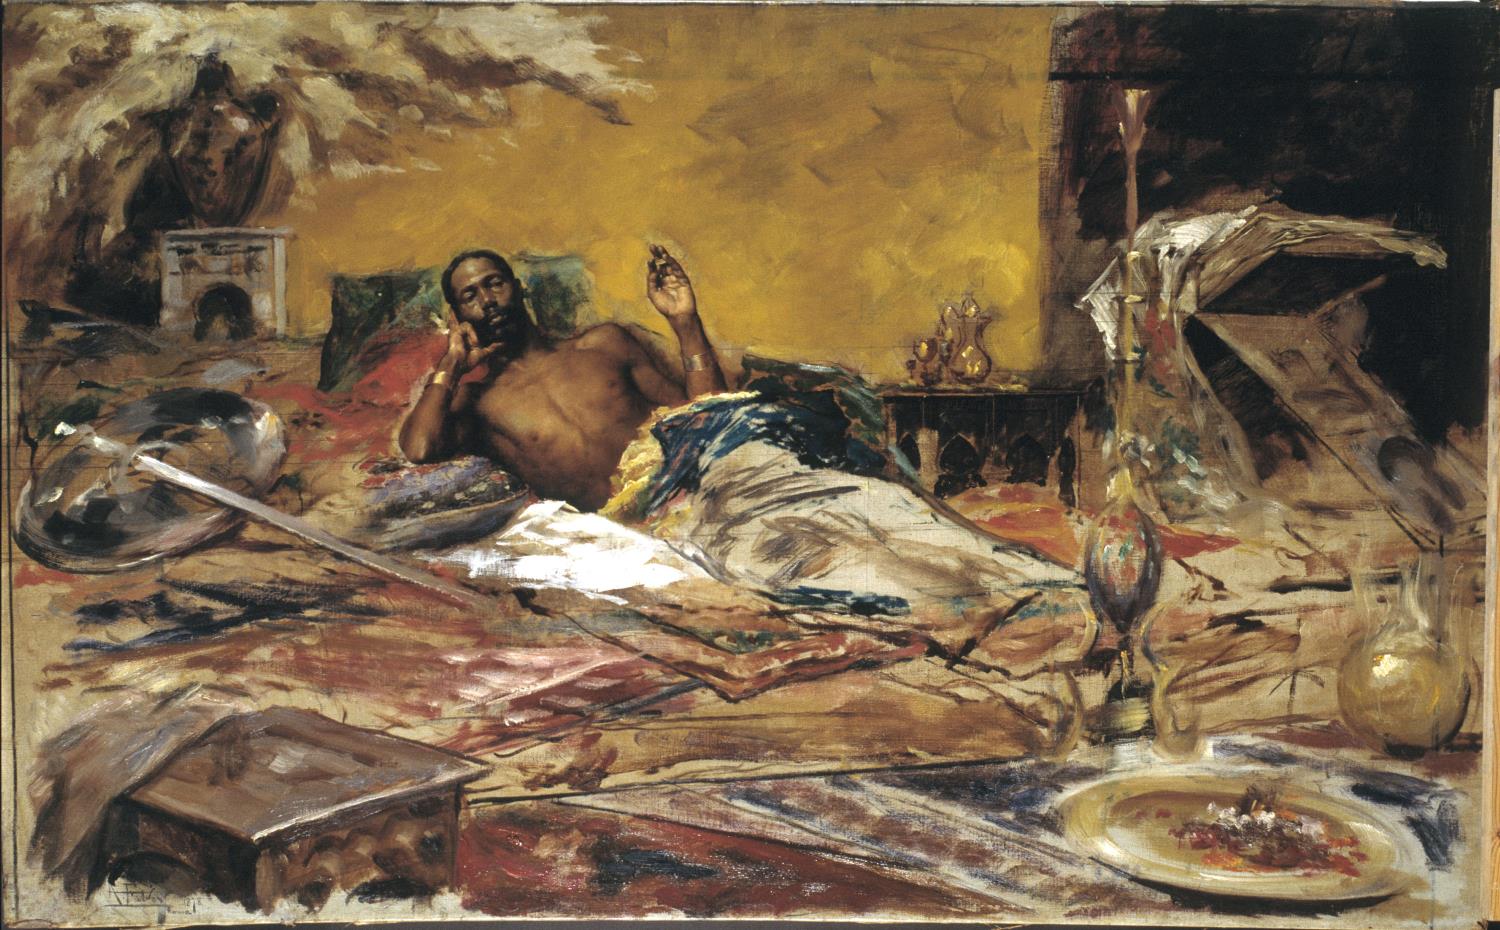 Antoni Fabrés, The Warrior's Repose, 1878